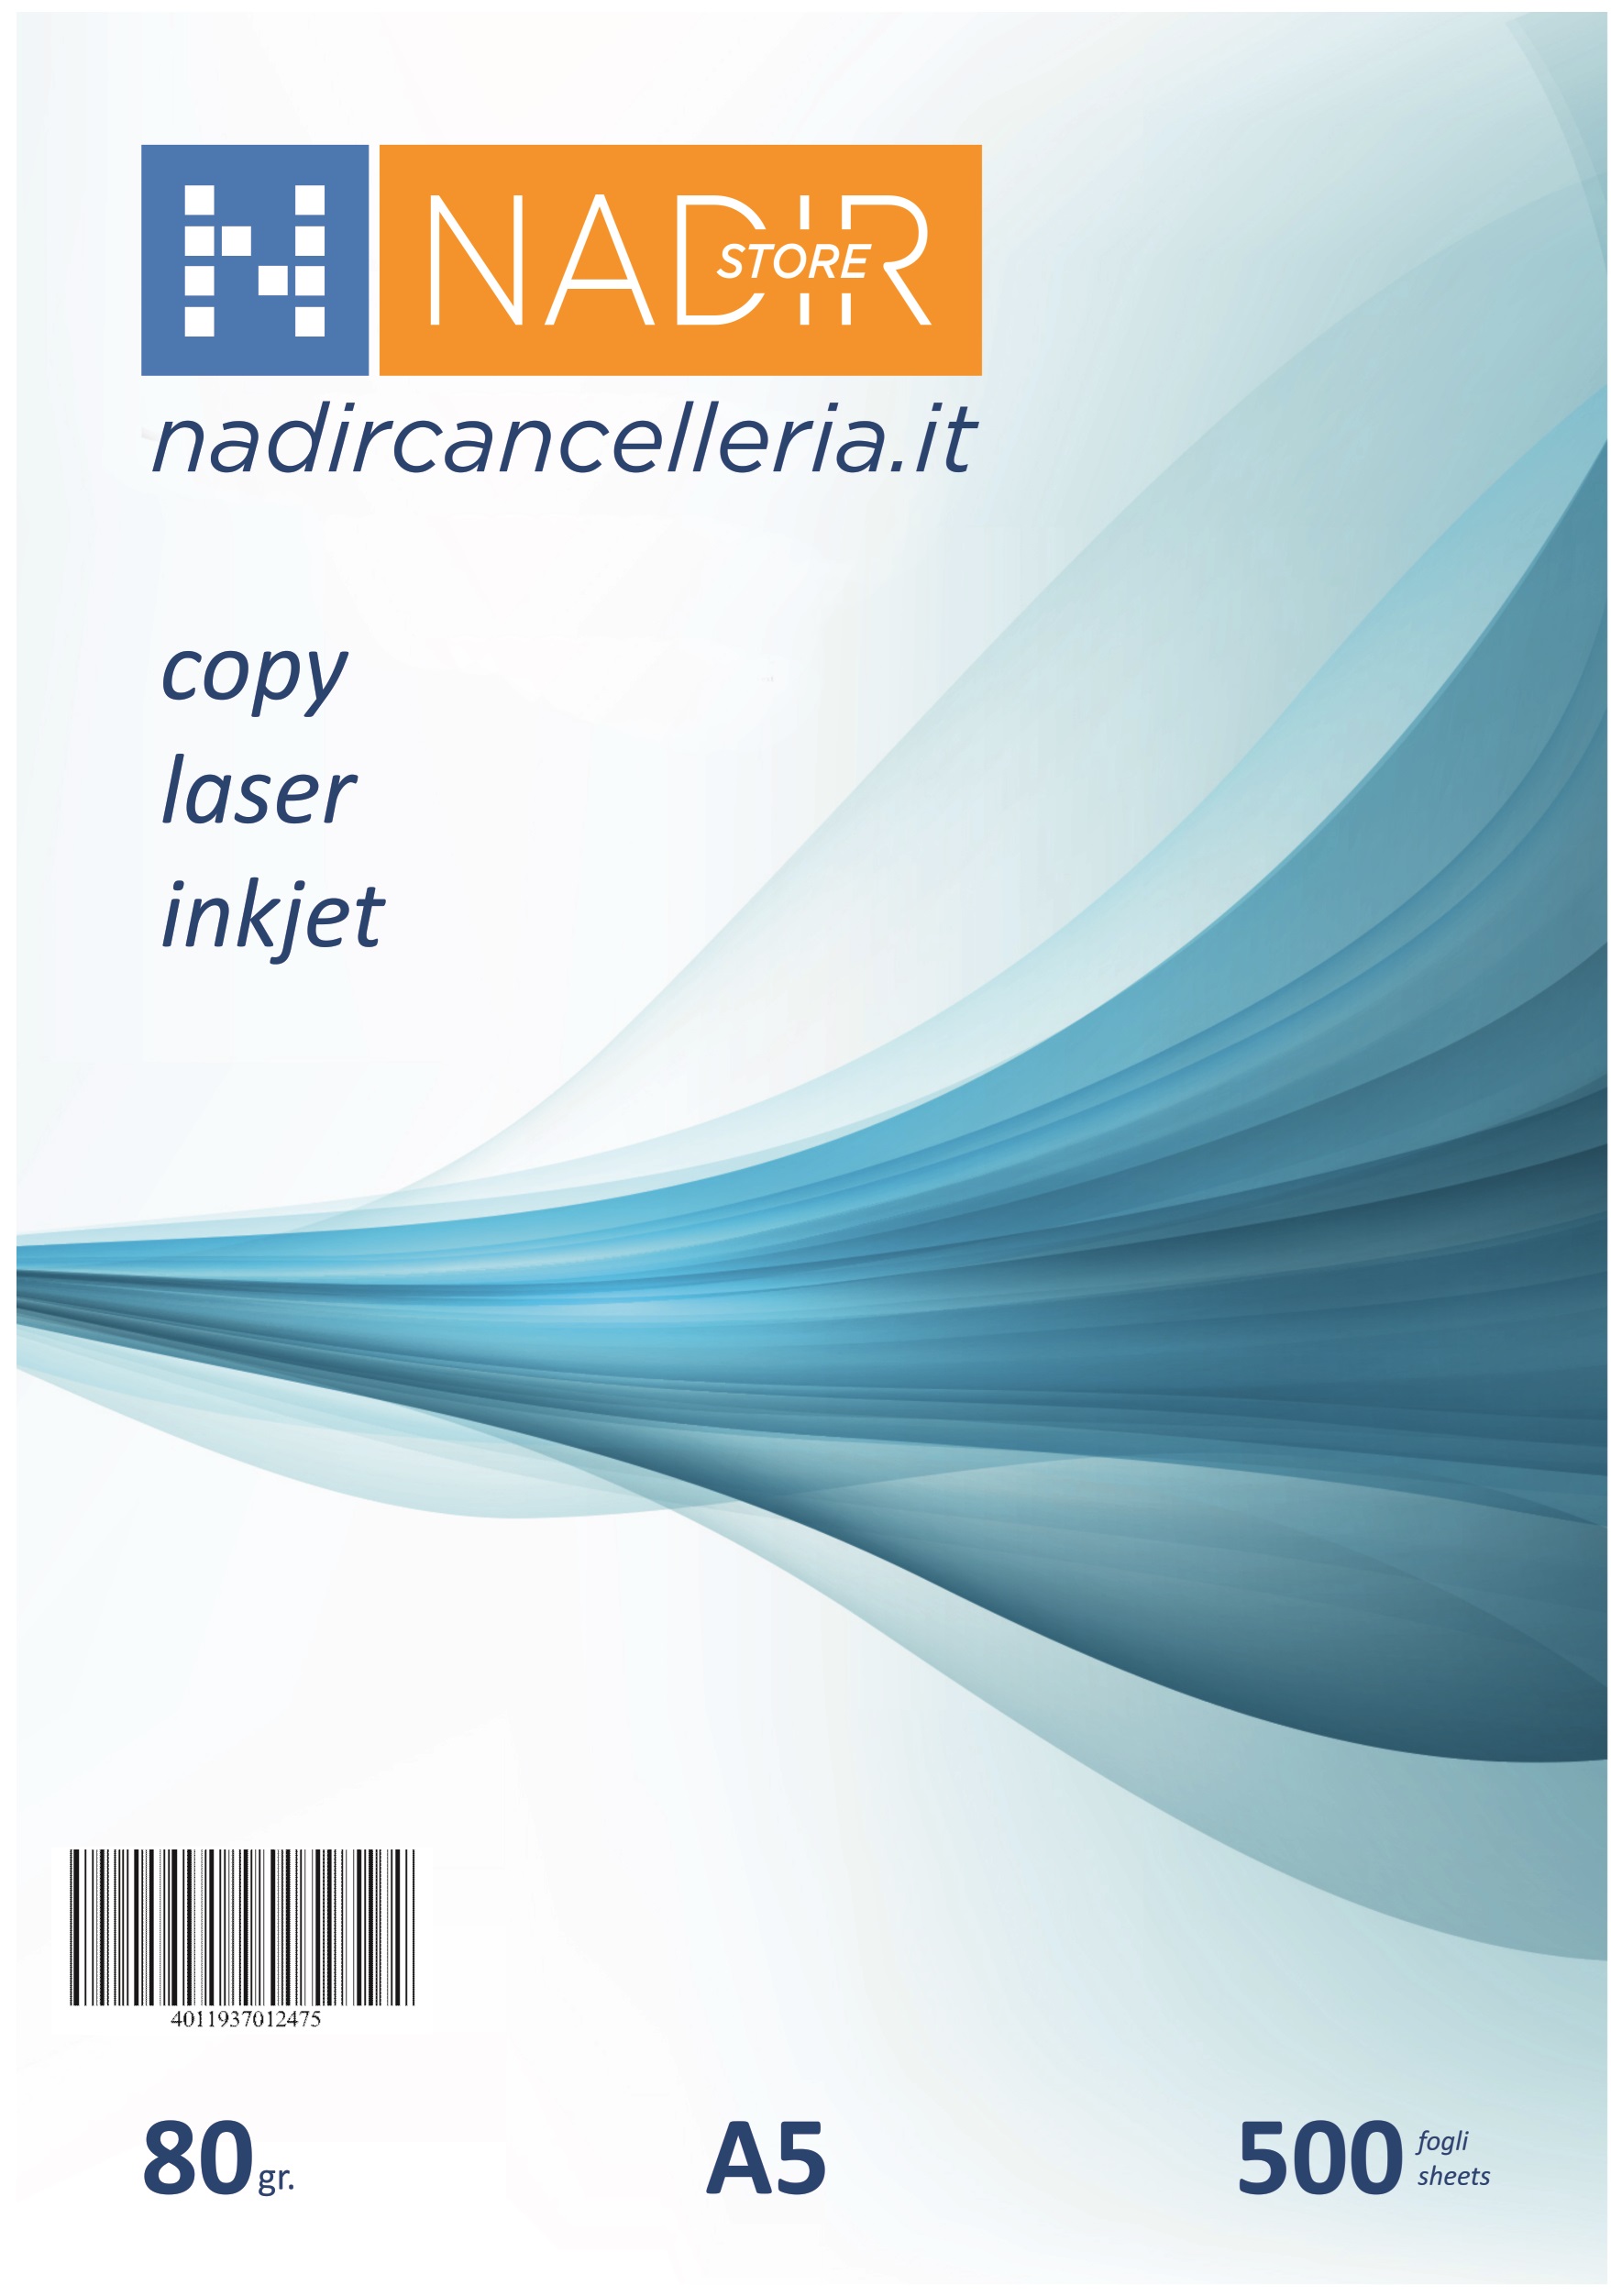 Carta per fotocopie fabriano copy1 a4 80gr 500ff - Nadir Cancelleria